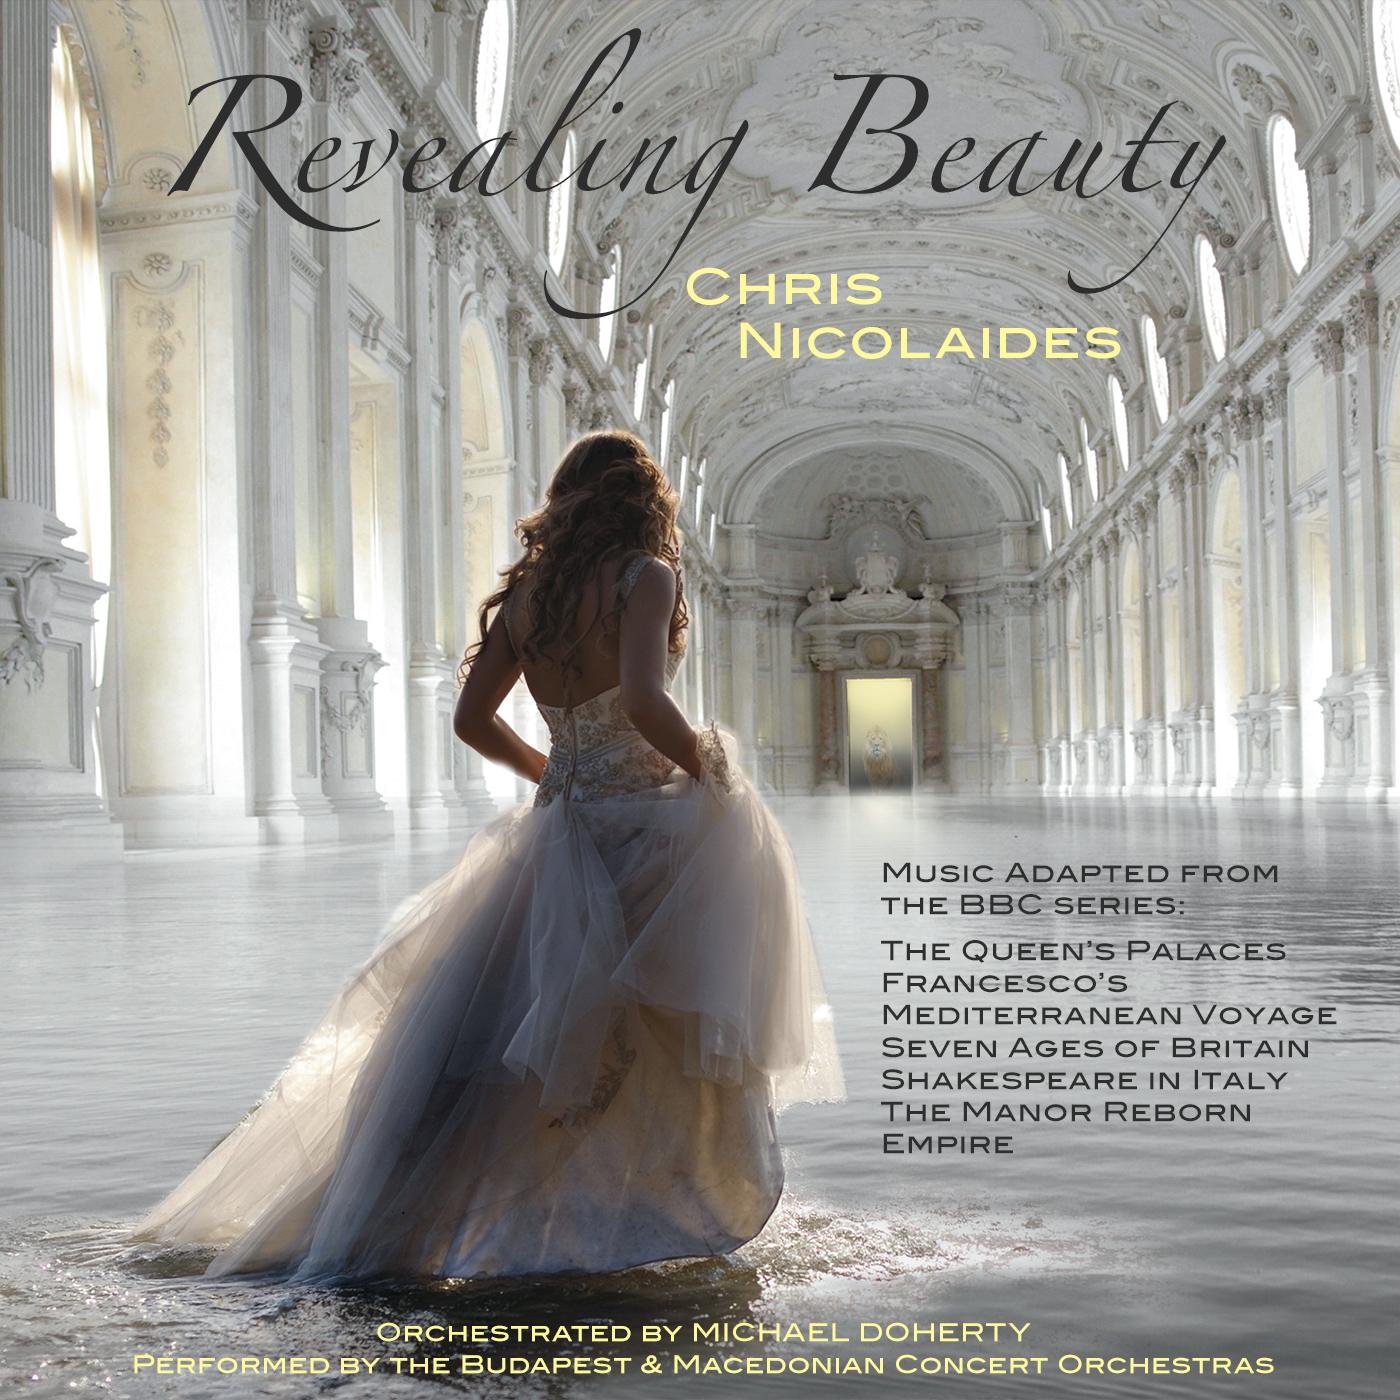 Chris Nicolaides - Revealing Beauty